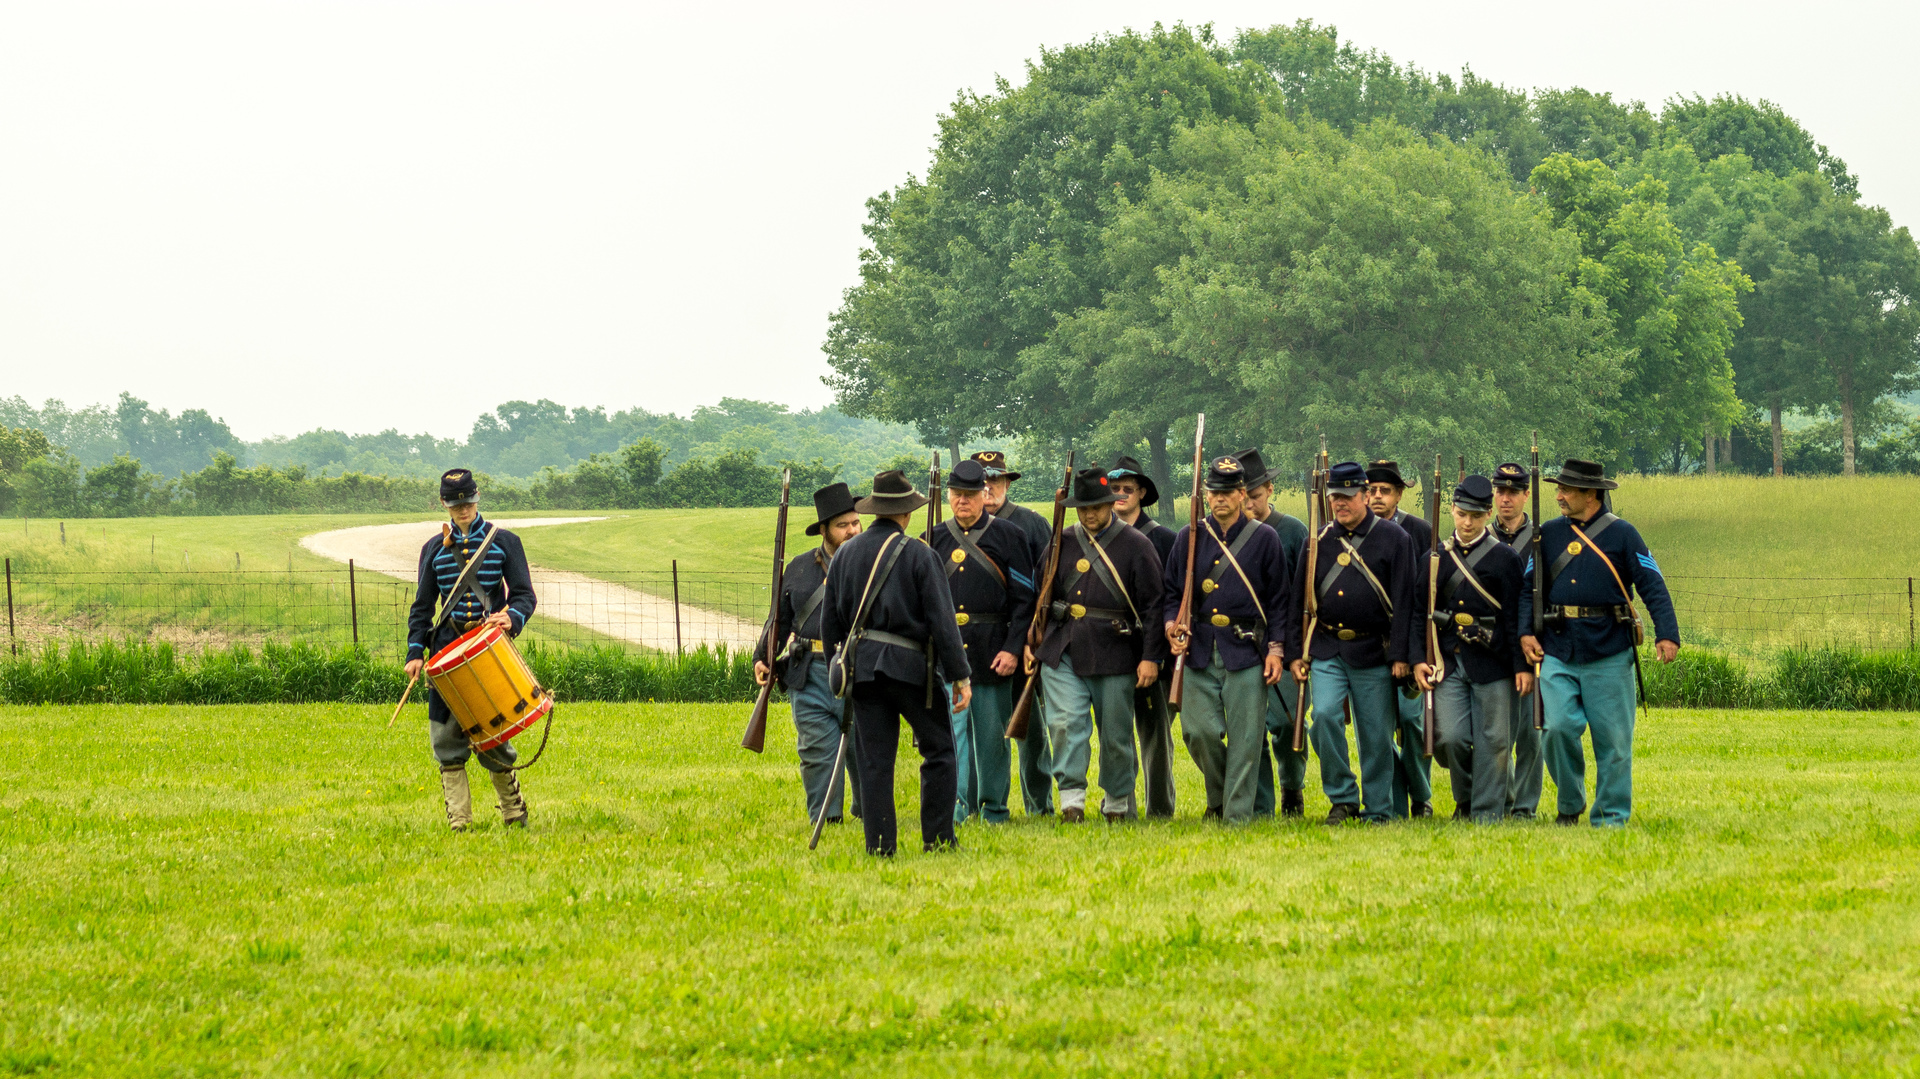 Lincoln Days Civil War Reenactment, Pittsfield, Illinois, United States